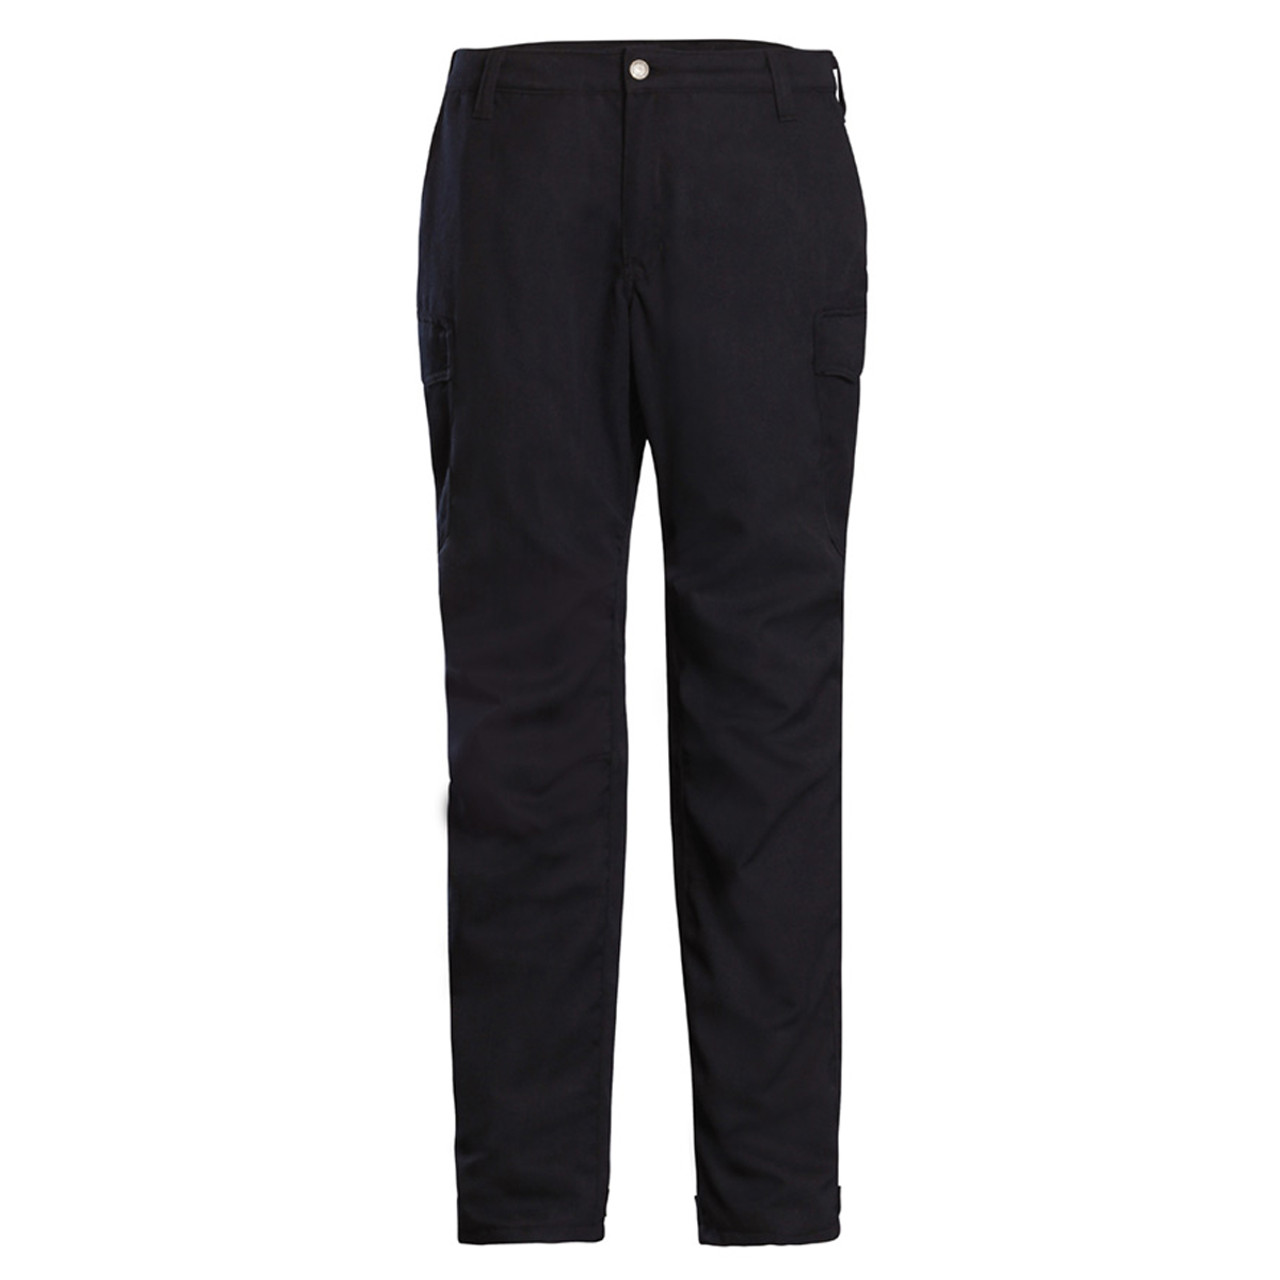 CrewBoss Dual Compliant Stationwear Pant - 6.8 oz. (Nomex) Black - LineGear